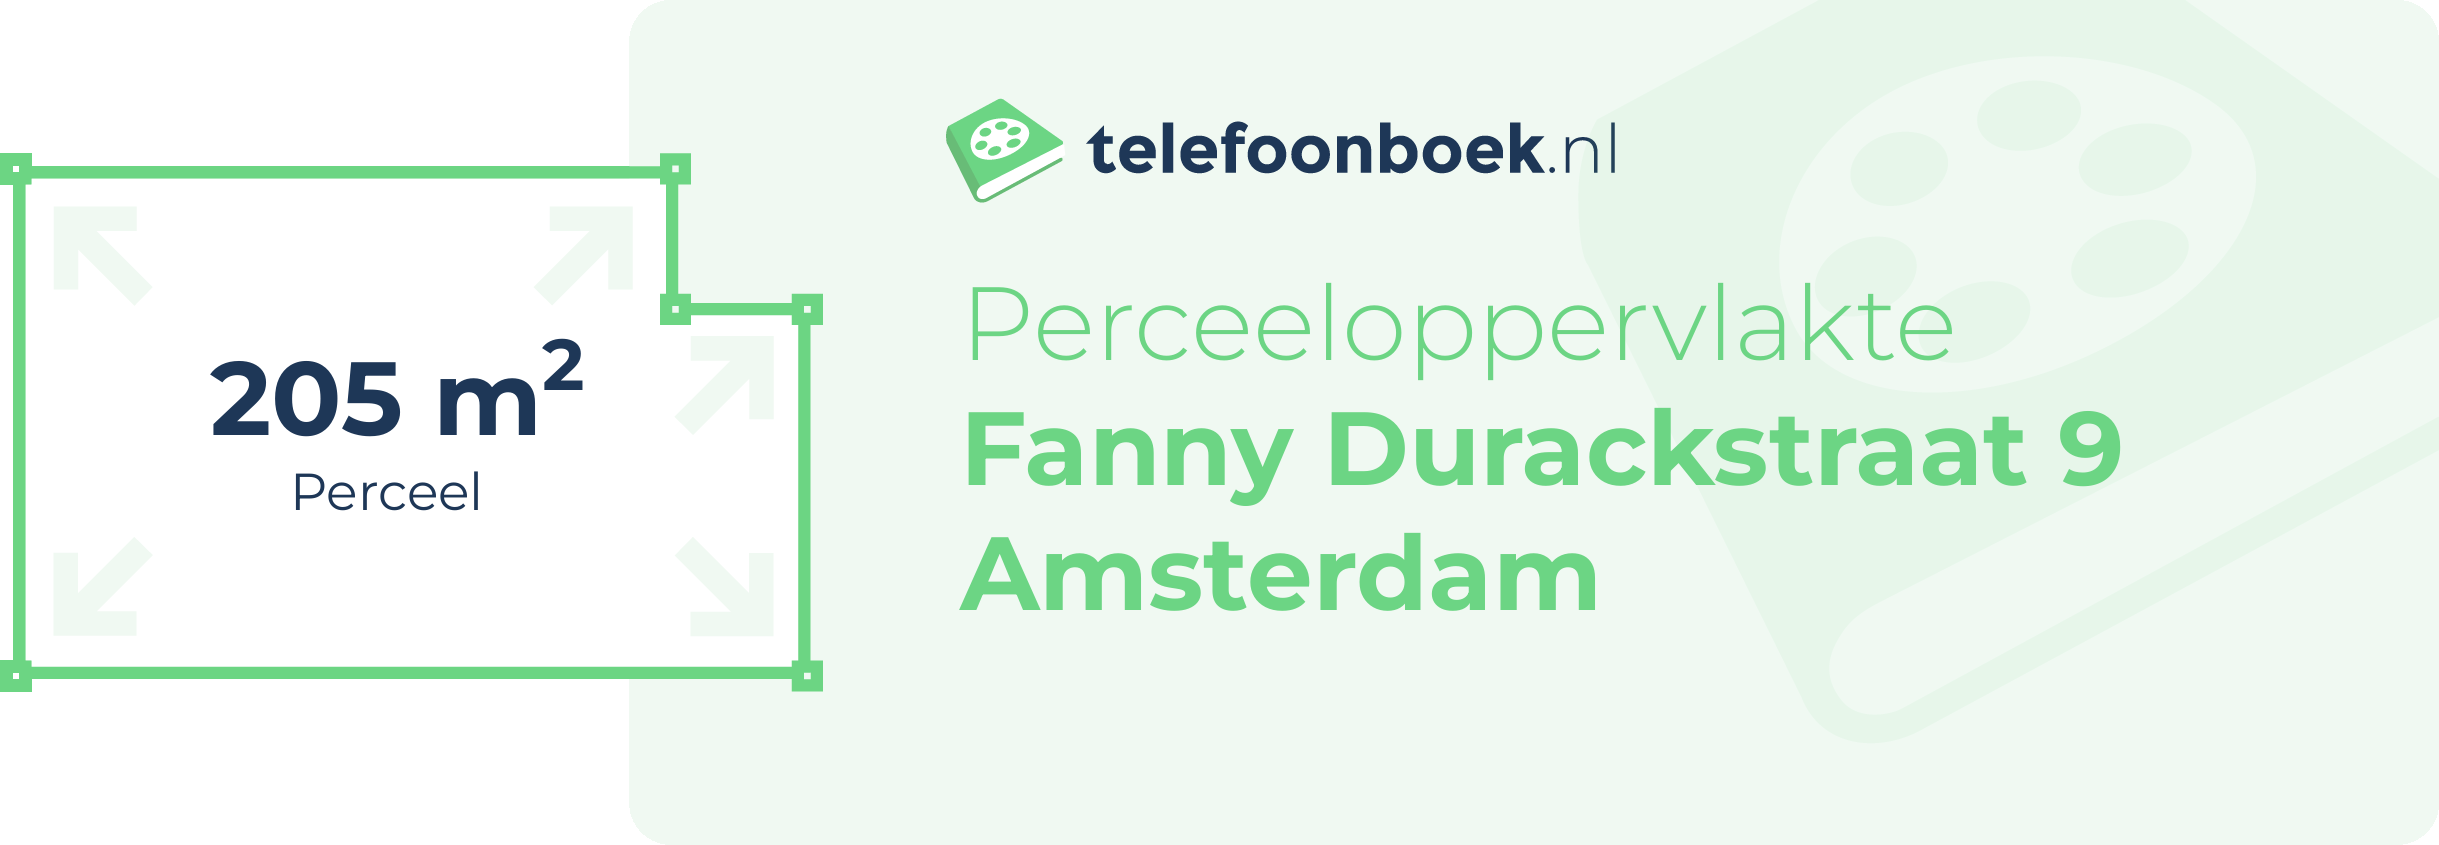 Perceeloppervlakte Fanny Durackstraat 9 Amsterdam